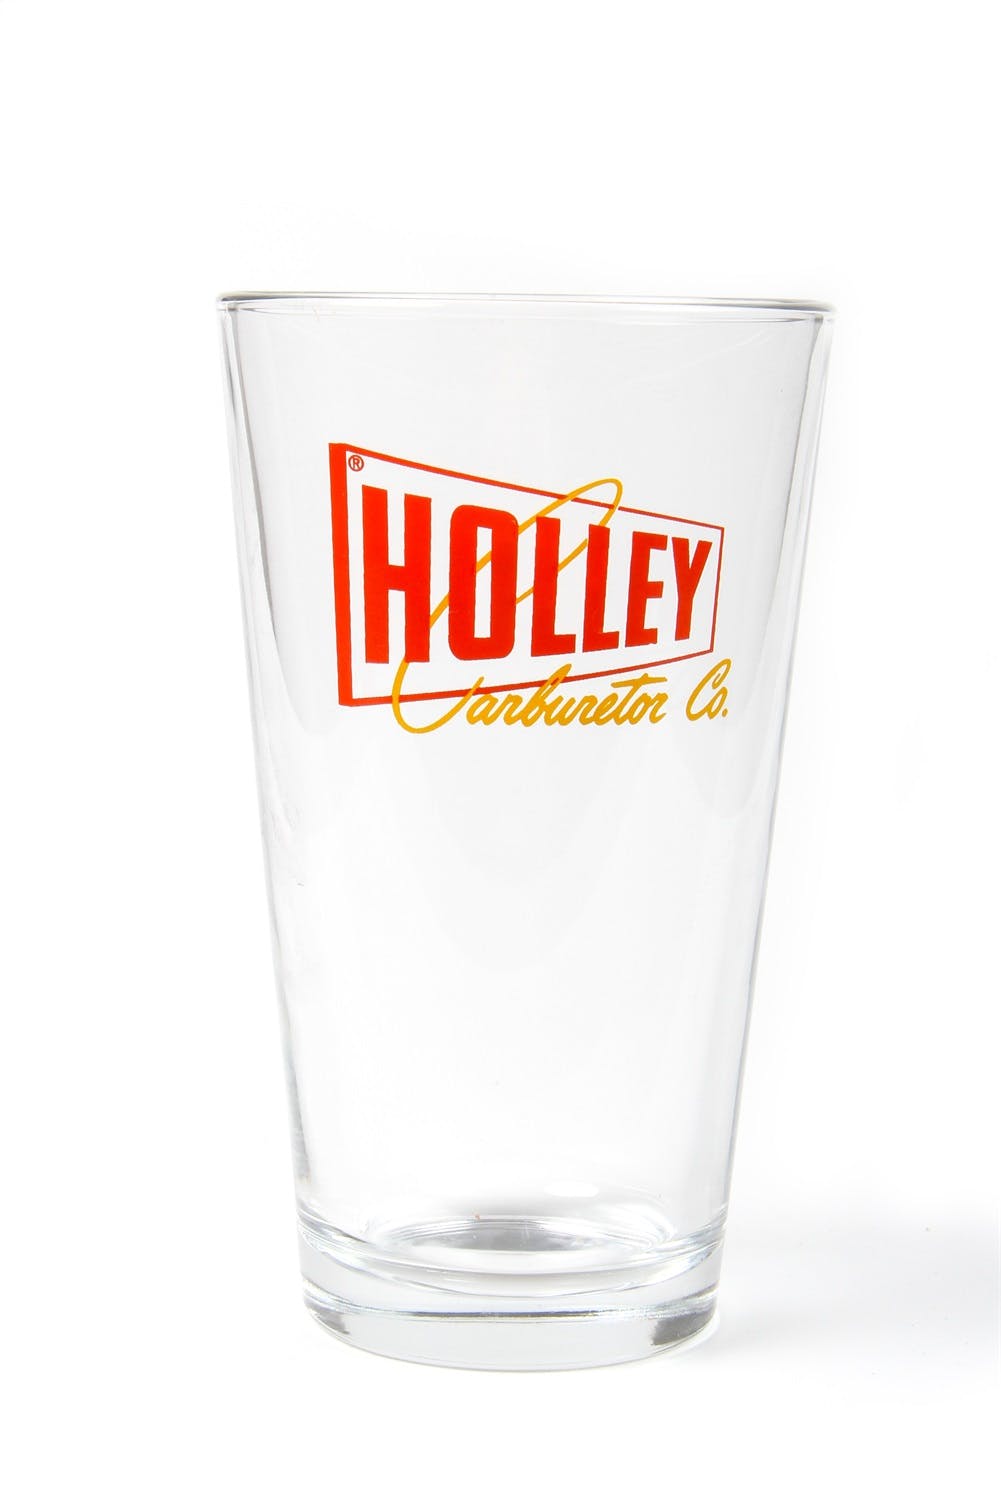 Holley 36-430 16oz Pub Glasses Assortment w/Holley Pennant Logo 4PK